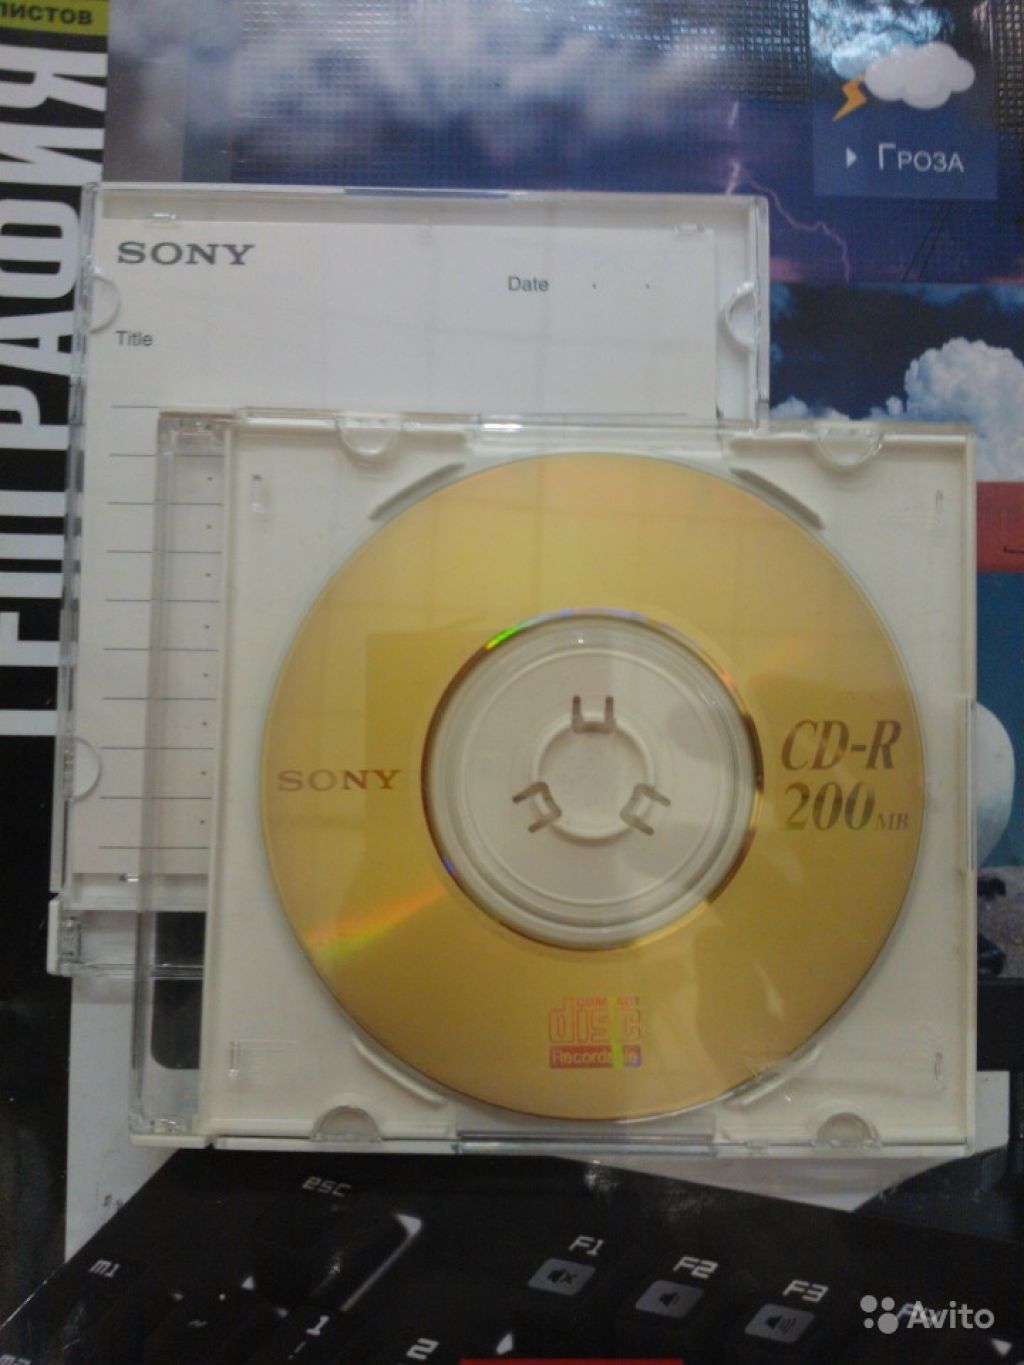 Купить cd sony. CD-R 200mb. Mini CD Sony. Sony CD it 90 Slide Case.